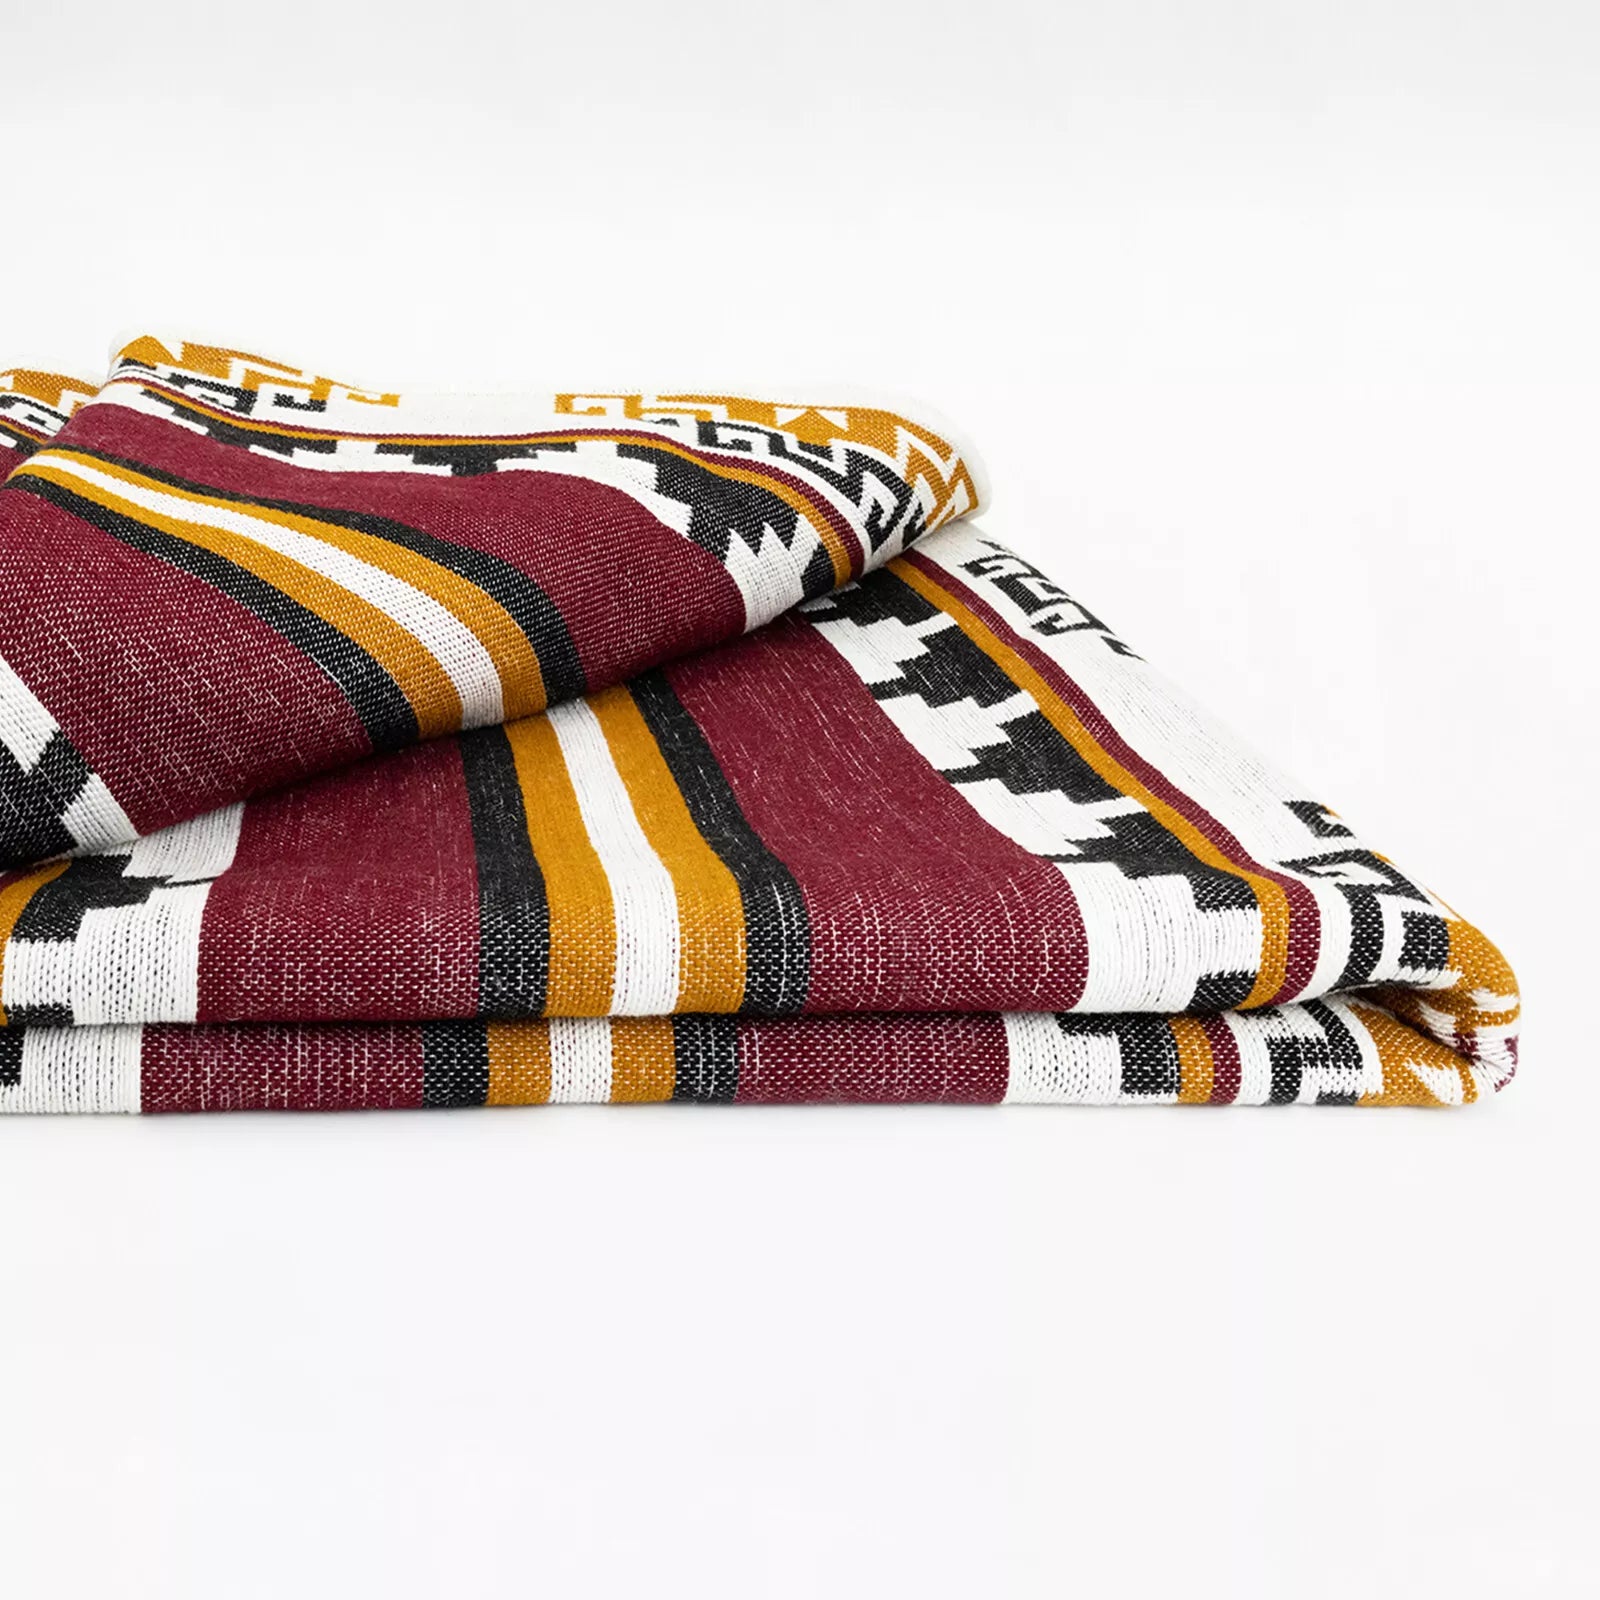 Capirona - Heavy and Thick Extra Large Llama wool artisanal handwoven Blanket - Burgundy/Mustard - Aztec Pattern